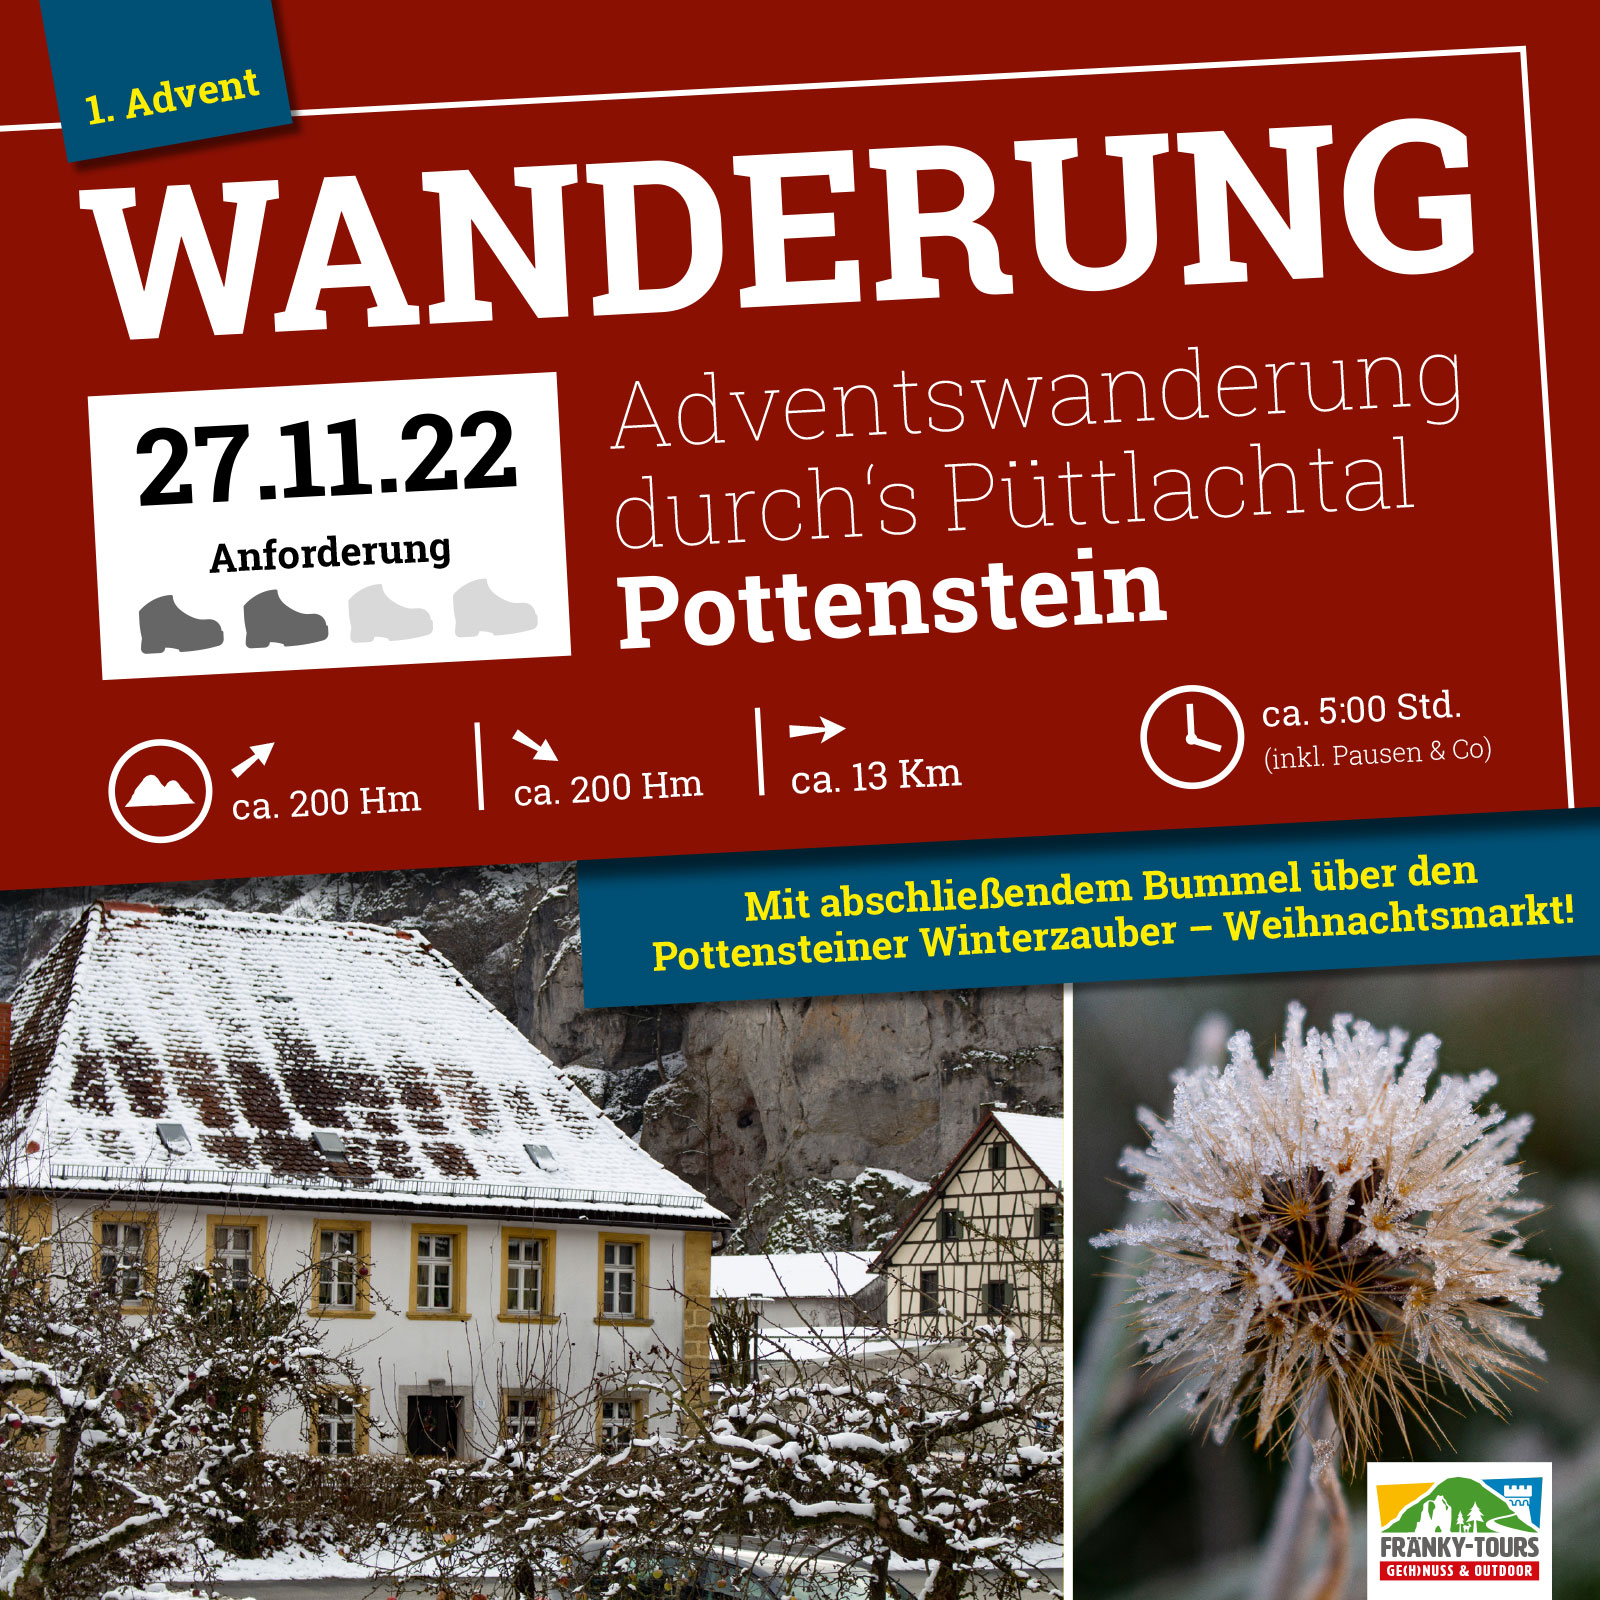 Pottensteiner Winterzauber, fränky-Tours